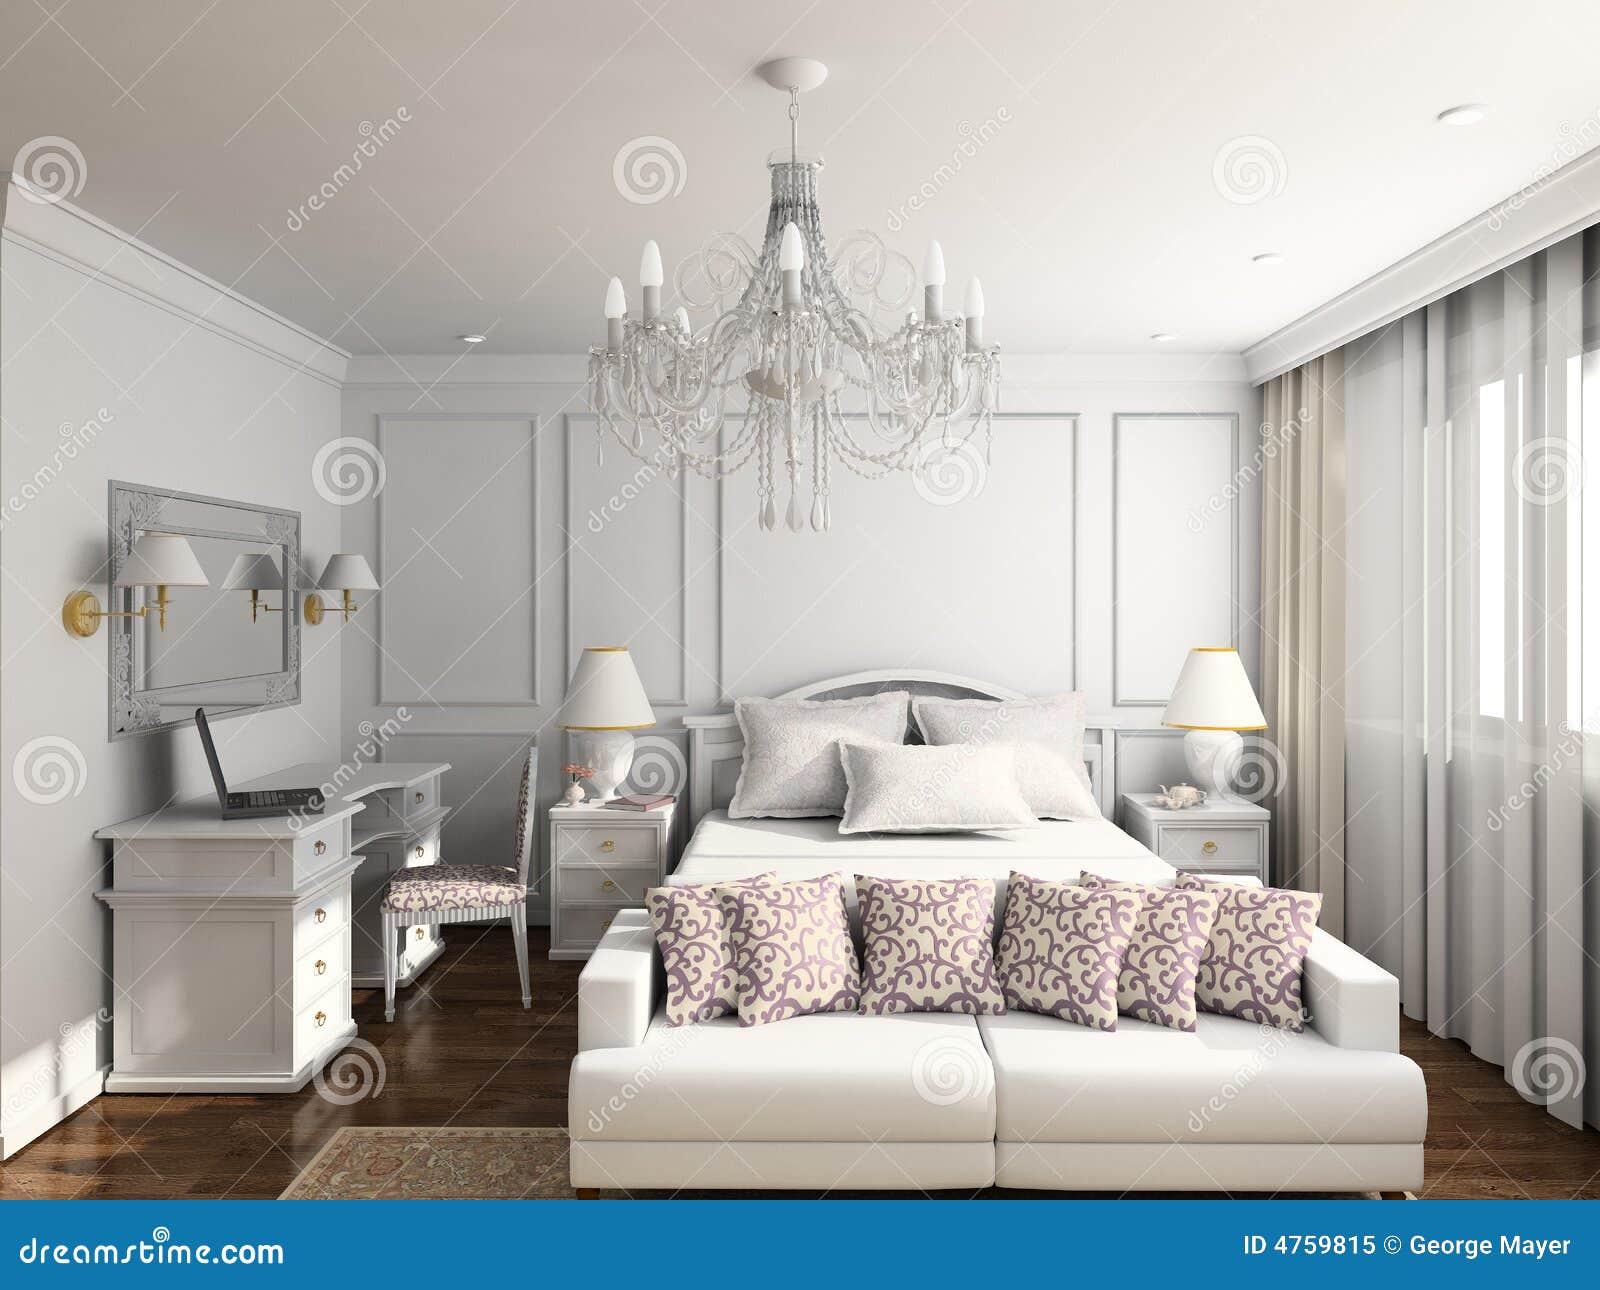 3D Render Modern Interior Of Bedroom Stock Image - Image ...